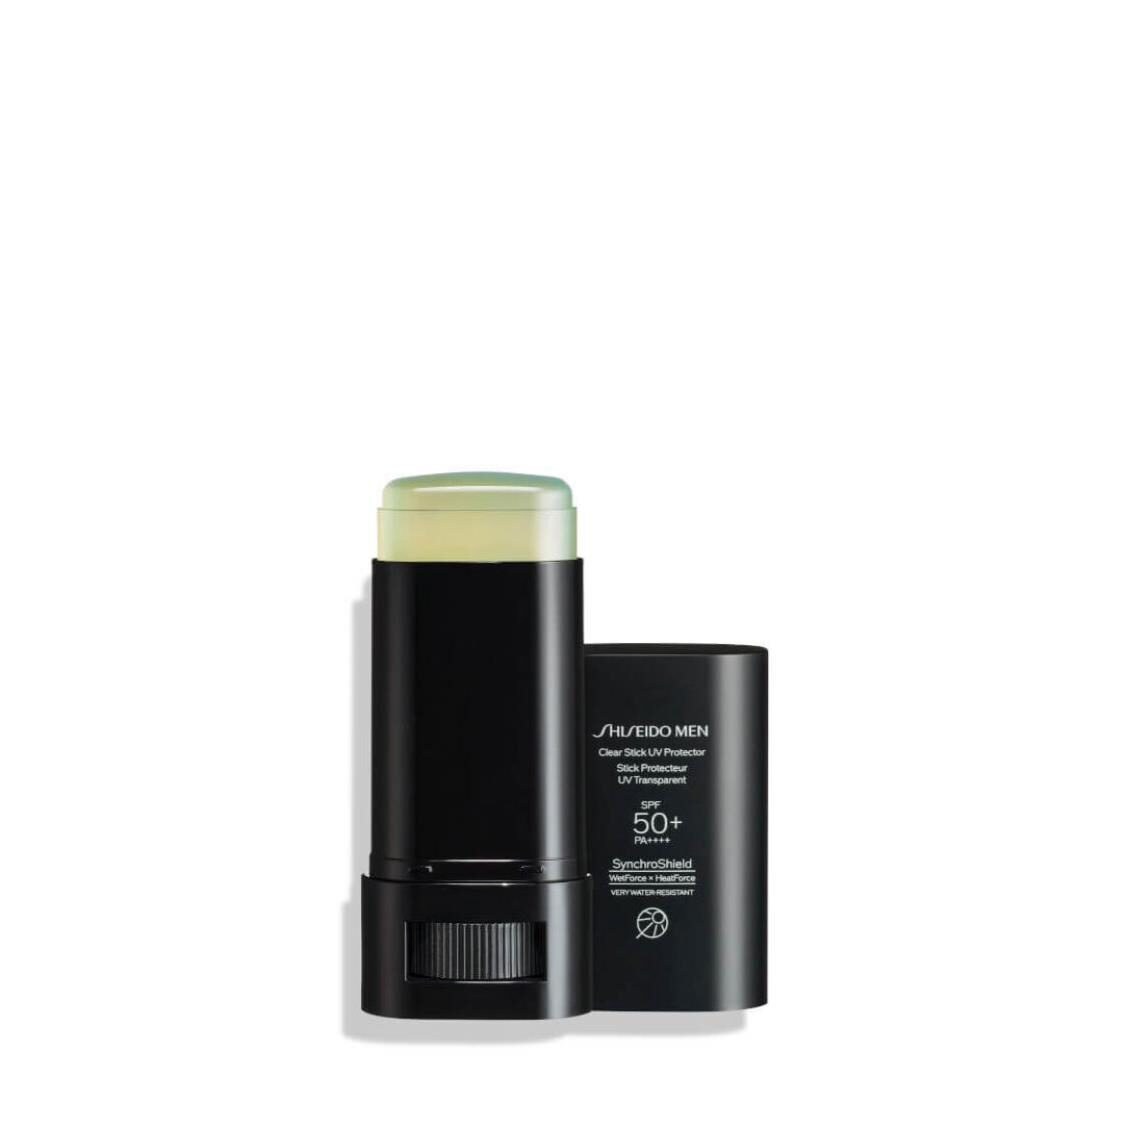 Shiseido Men Clear Stick UV Protector SPF 50+ Metro Department Store